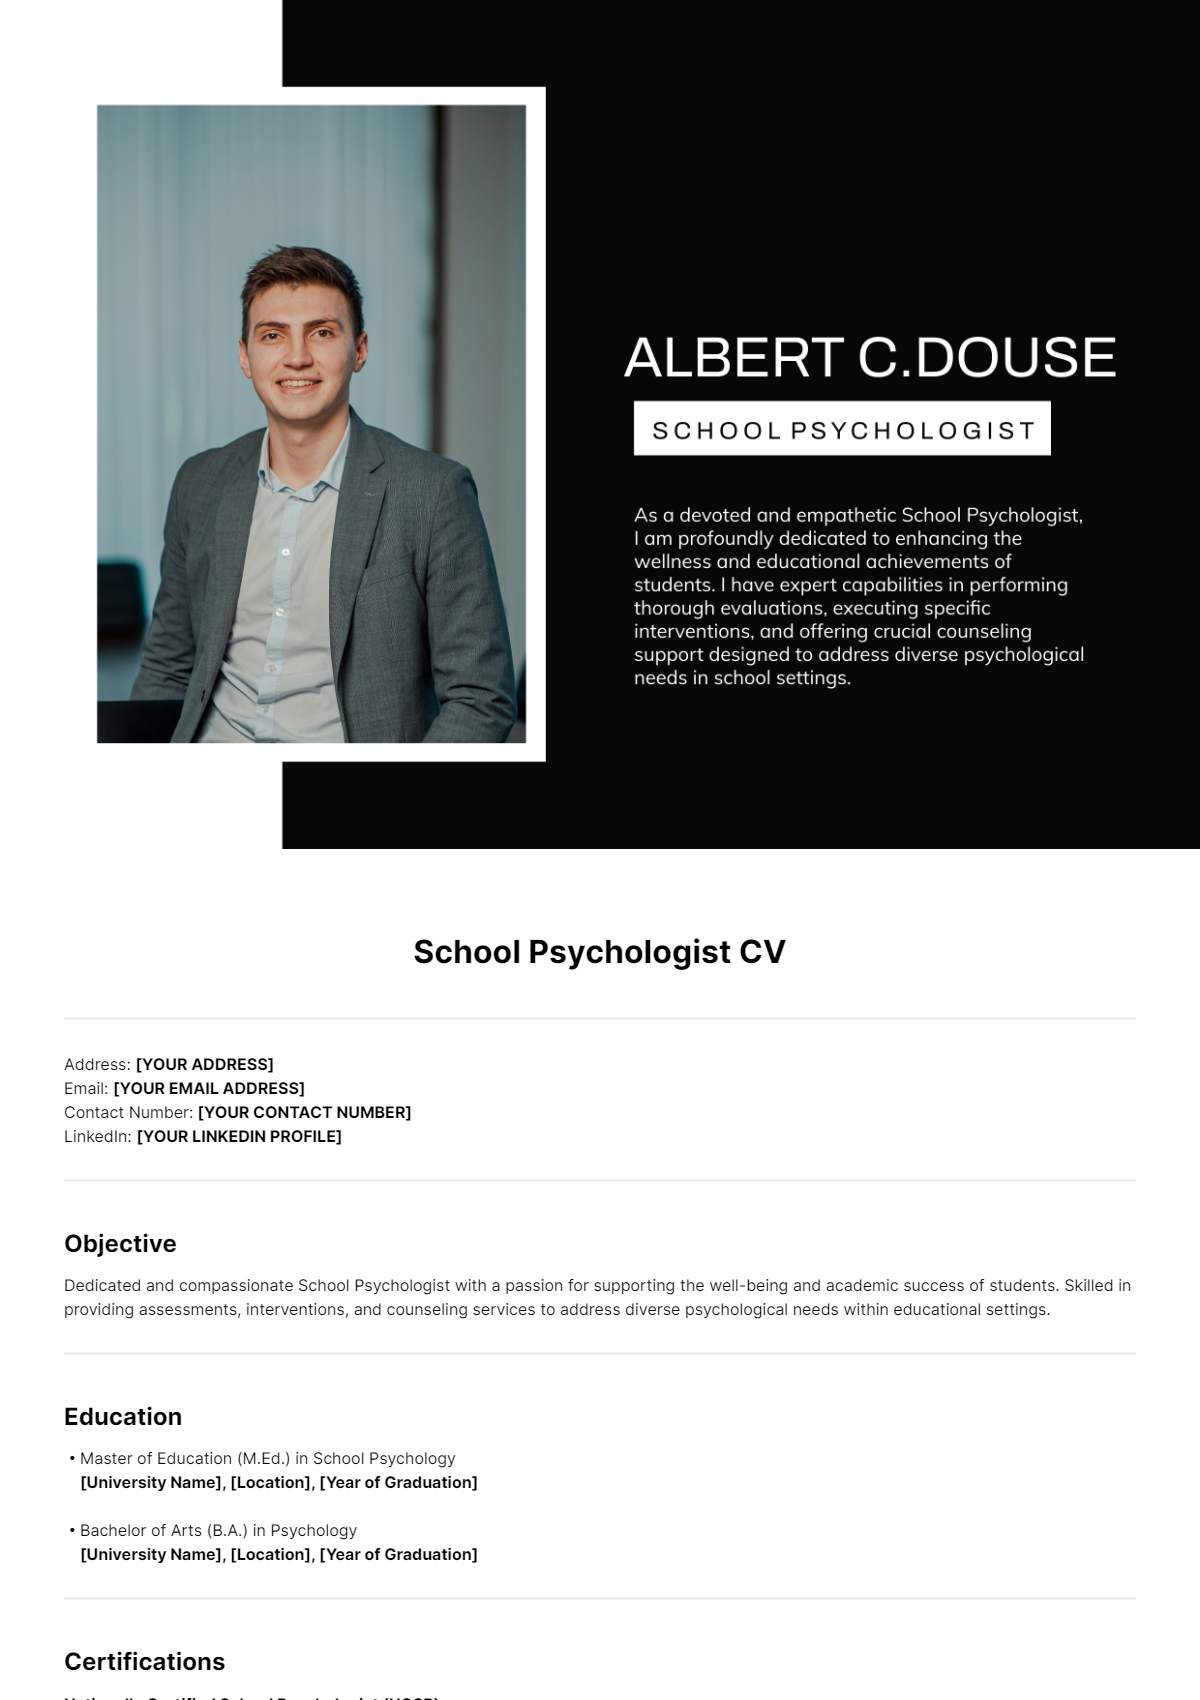 School Psychologist CV Template